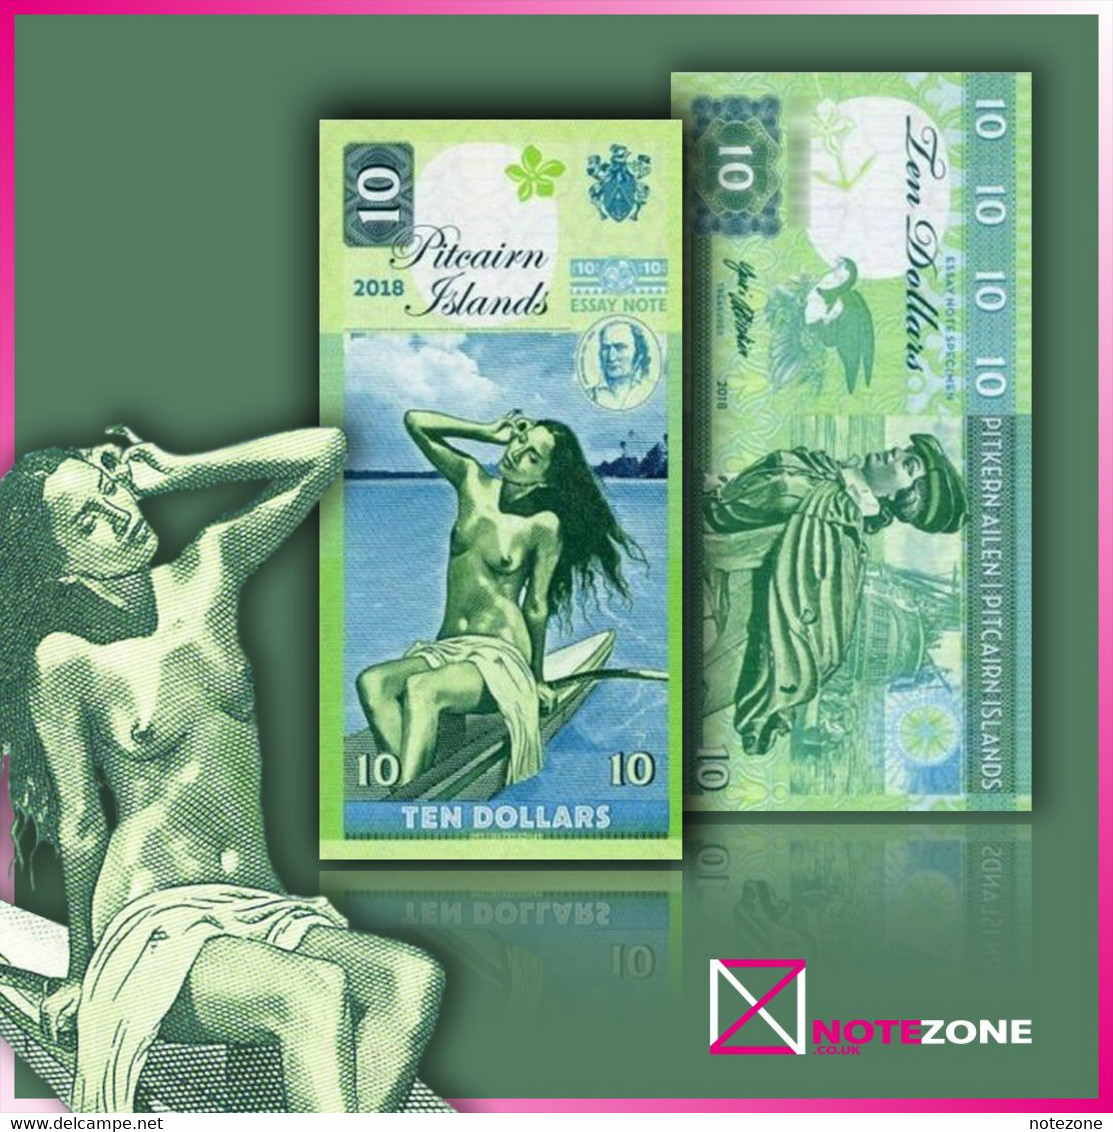 Matej Gabris $10 Pitcairn Islands Banknote Private Fantasy Test - Séries Collector